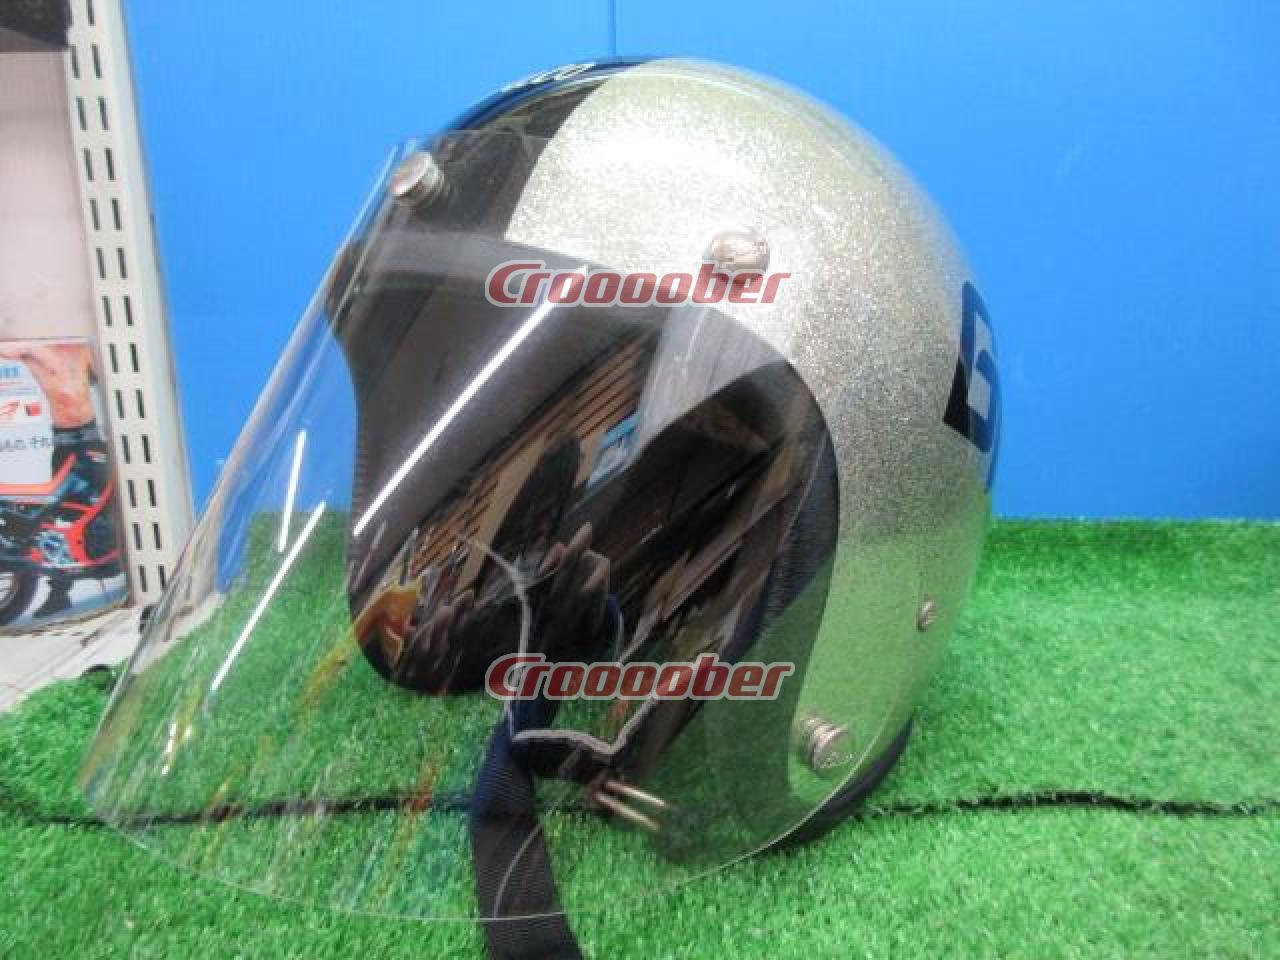 BUCO(ブコ) SMALL BUCO ジェットヘルメット 54-55cm | ヘルメット ジェットヘルメット(二輪)パーツの通販なら | Croooober(クルーバー)